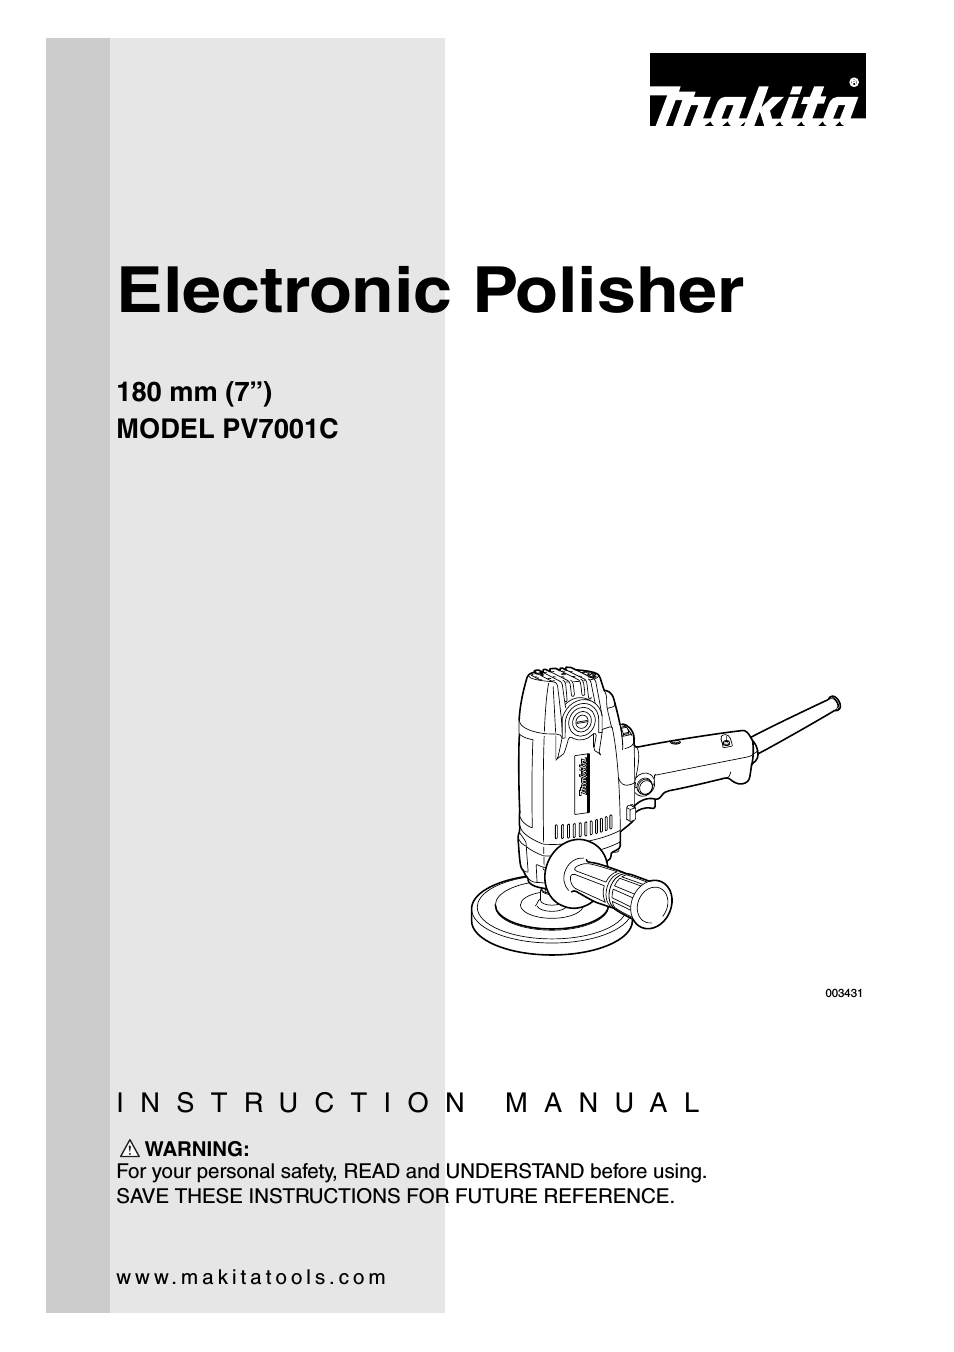 Electronic Polisher PV7001C